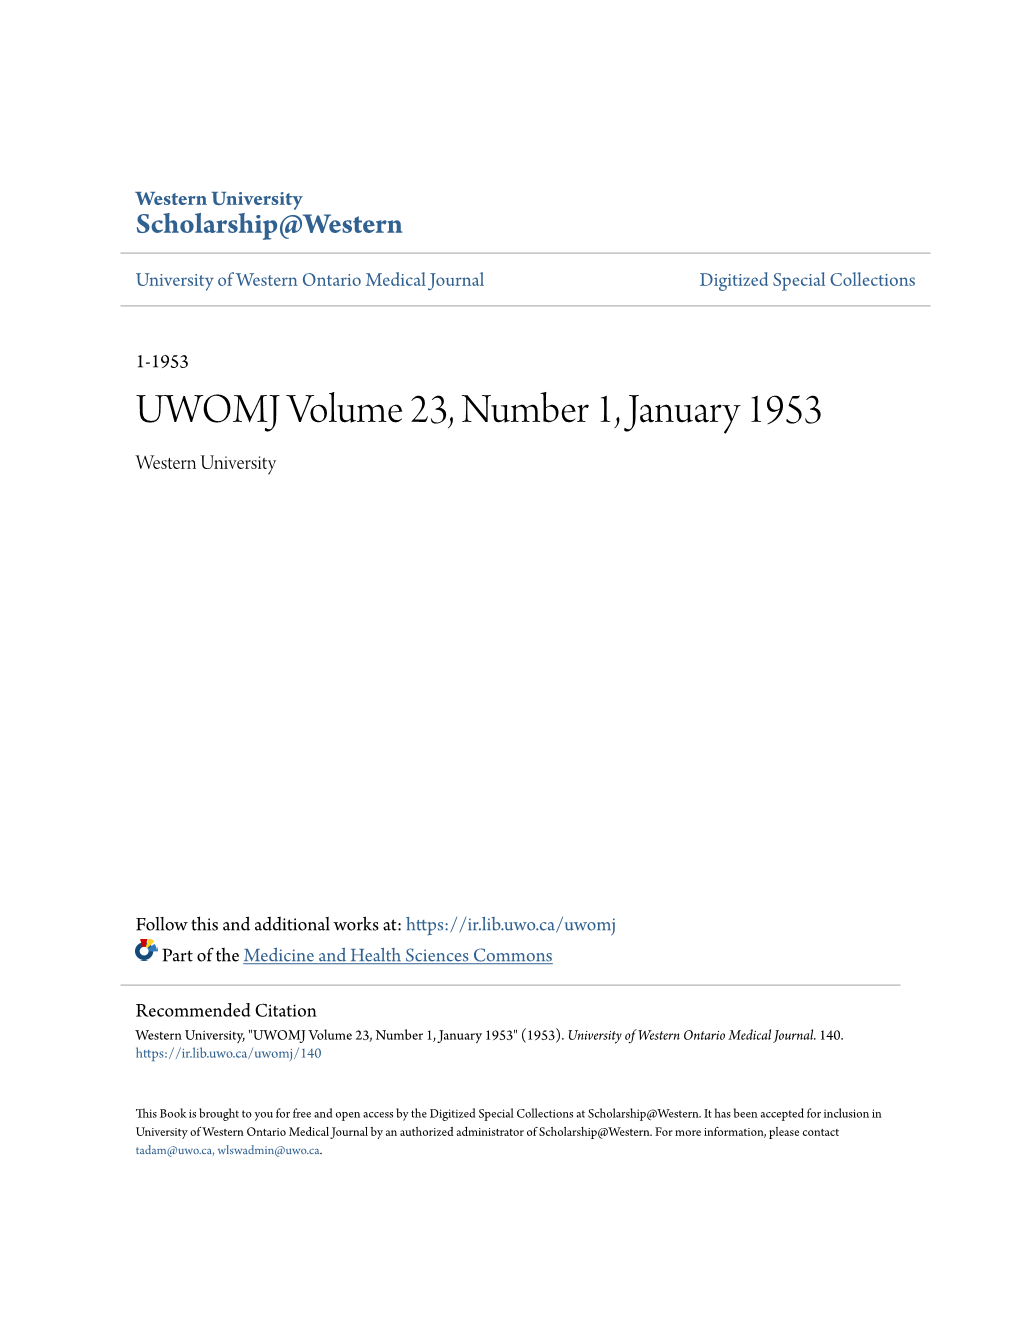 UWOMJ Volume 23, Number 1, January 1953 Western University